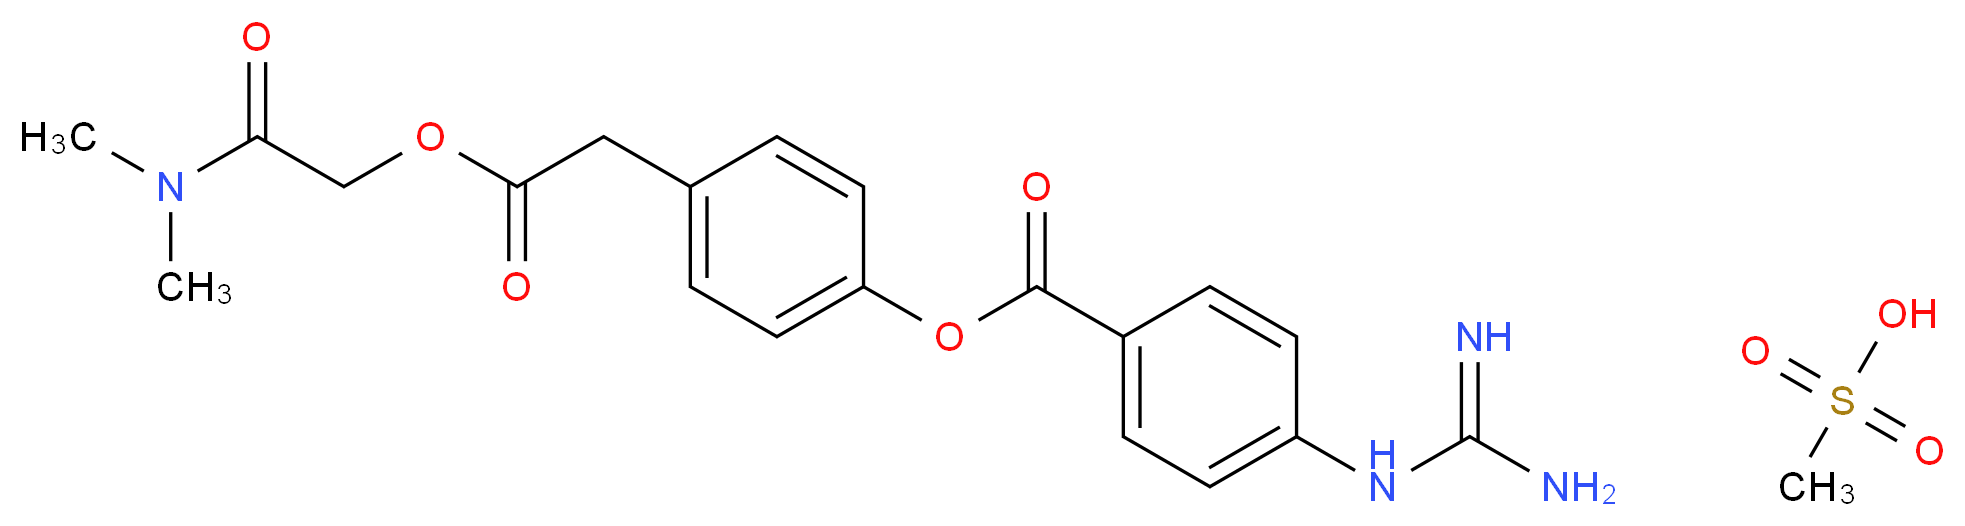 Camostat Mesilate (FOY-305)_Molecular_structure_CAS_59721-29-8)